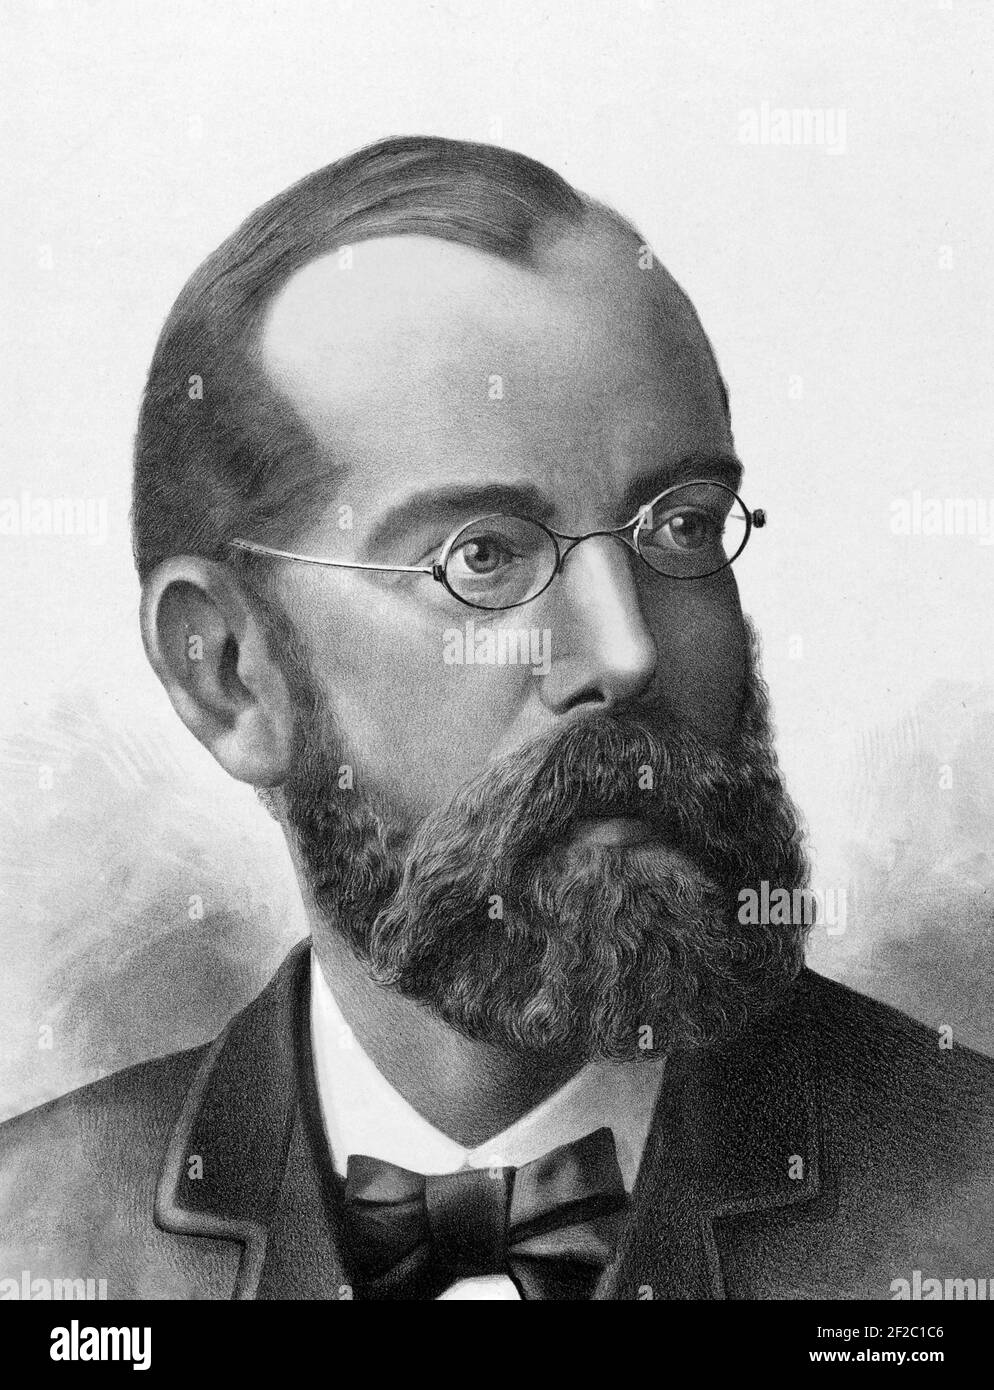 Robert Koch. Portrait du microbiologiste et médecin allemand lauréat du prix Nobel, Heinrich Hermann Robert Koch (1843-1910), lithographie, 1887 Banque D'Images